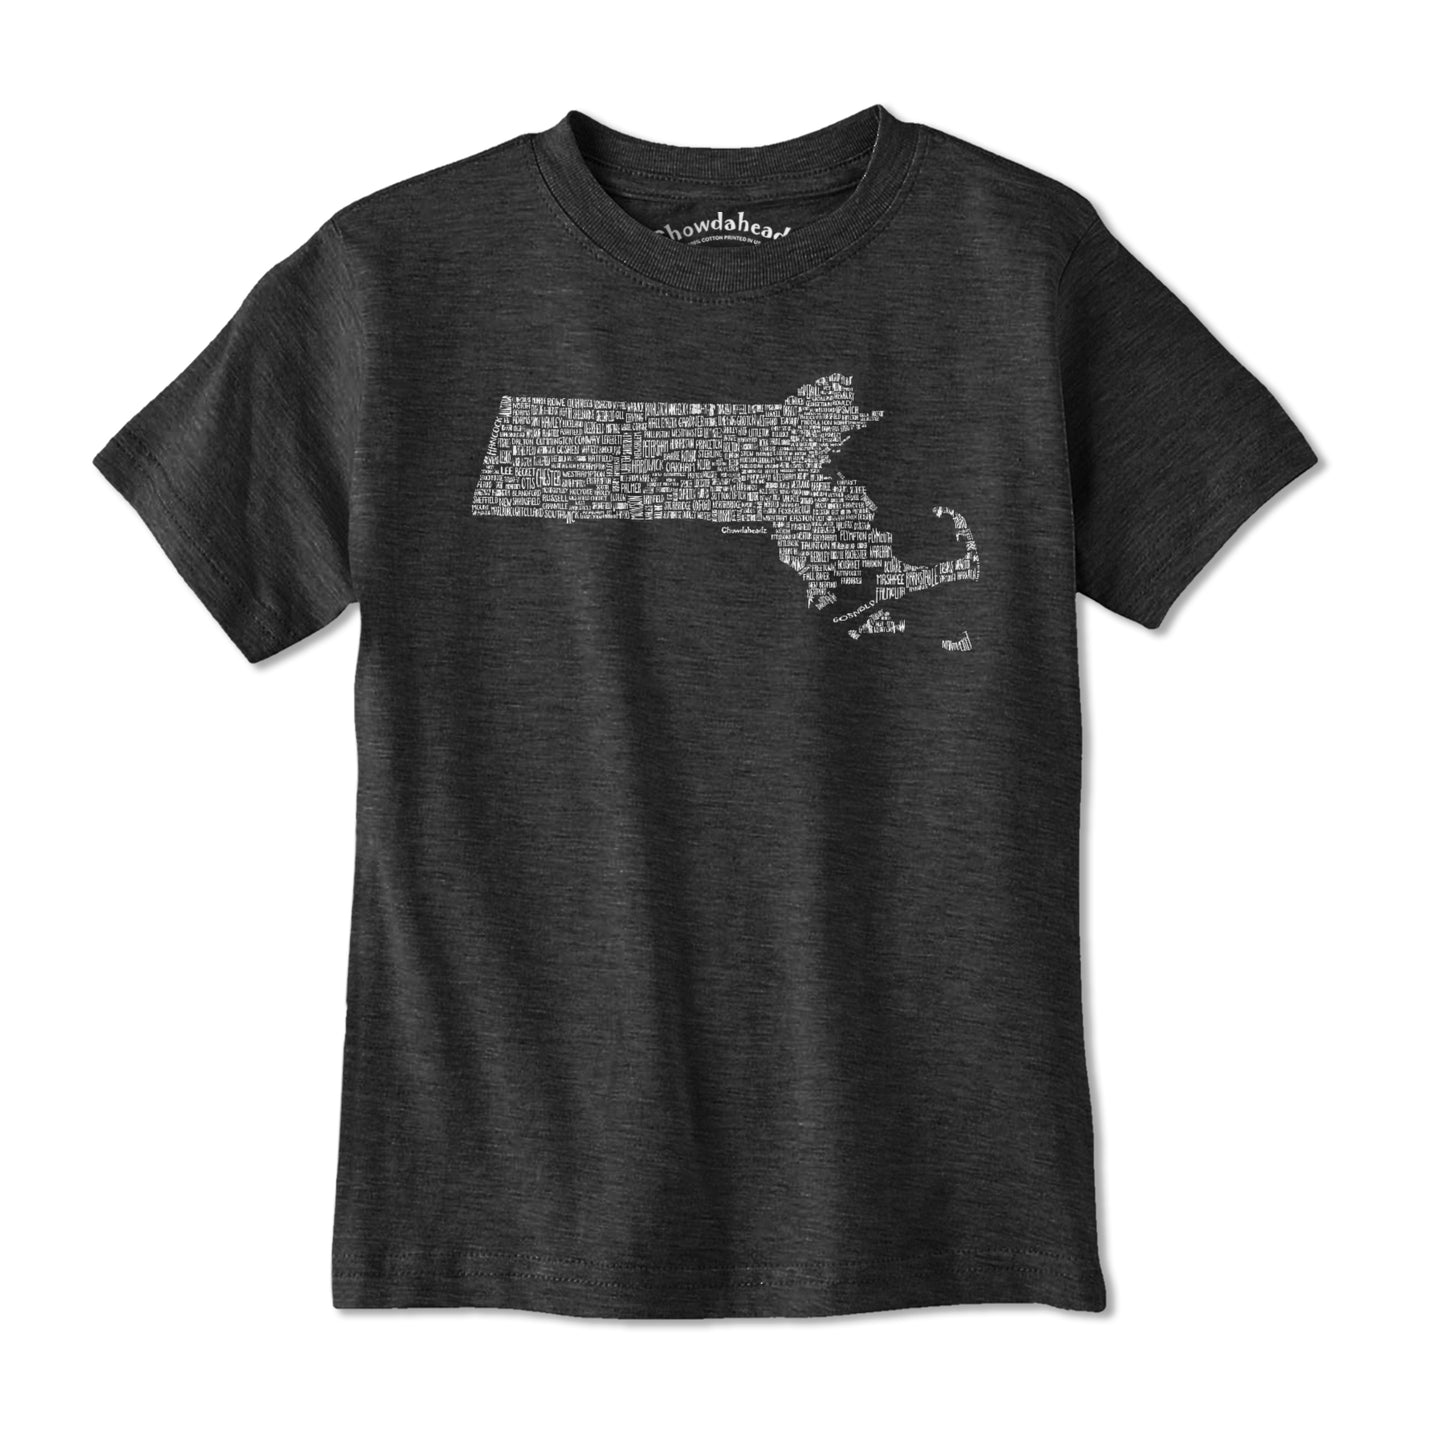 Massachusetts Cities & Towns Youth T-Shirt - Chowdaheadz